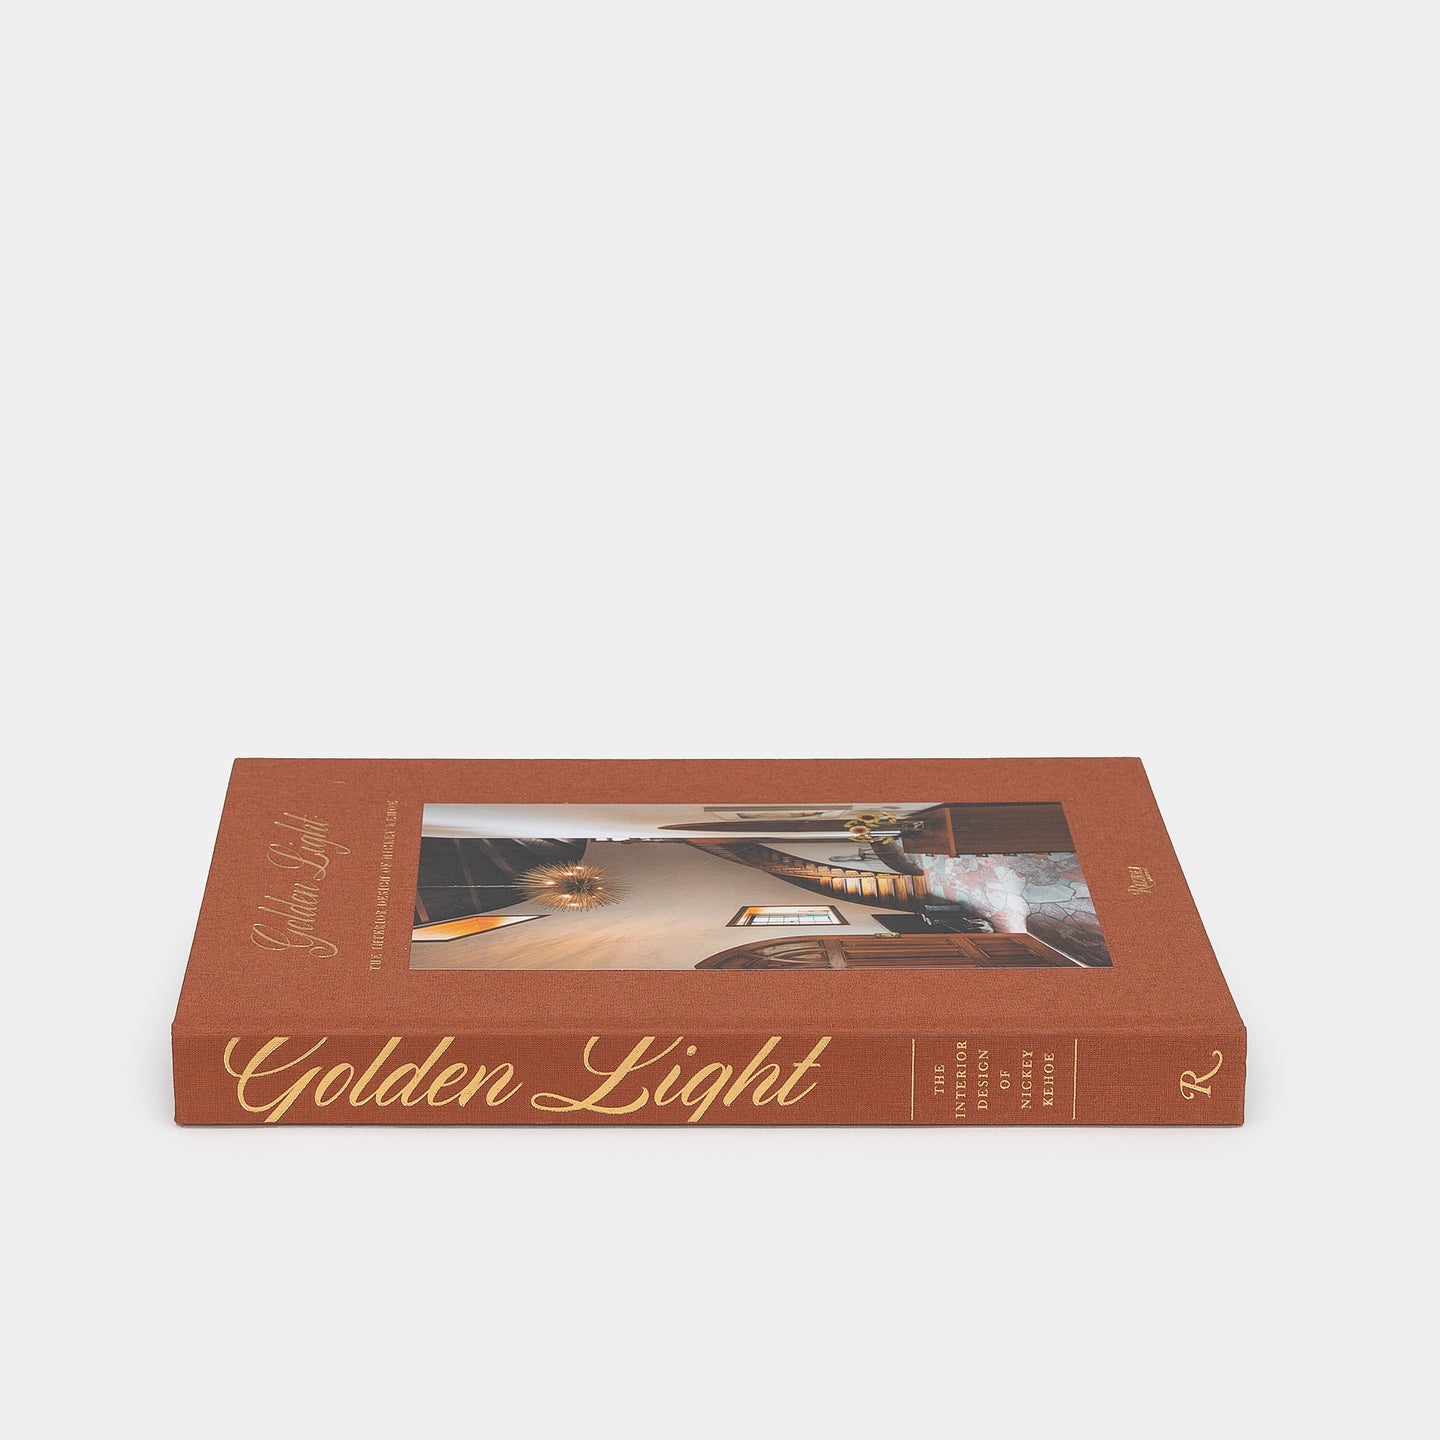 Golden Light: The Interior Design of Nickey Kehoe